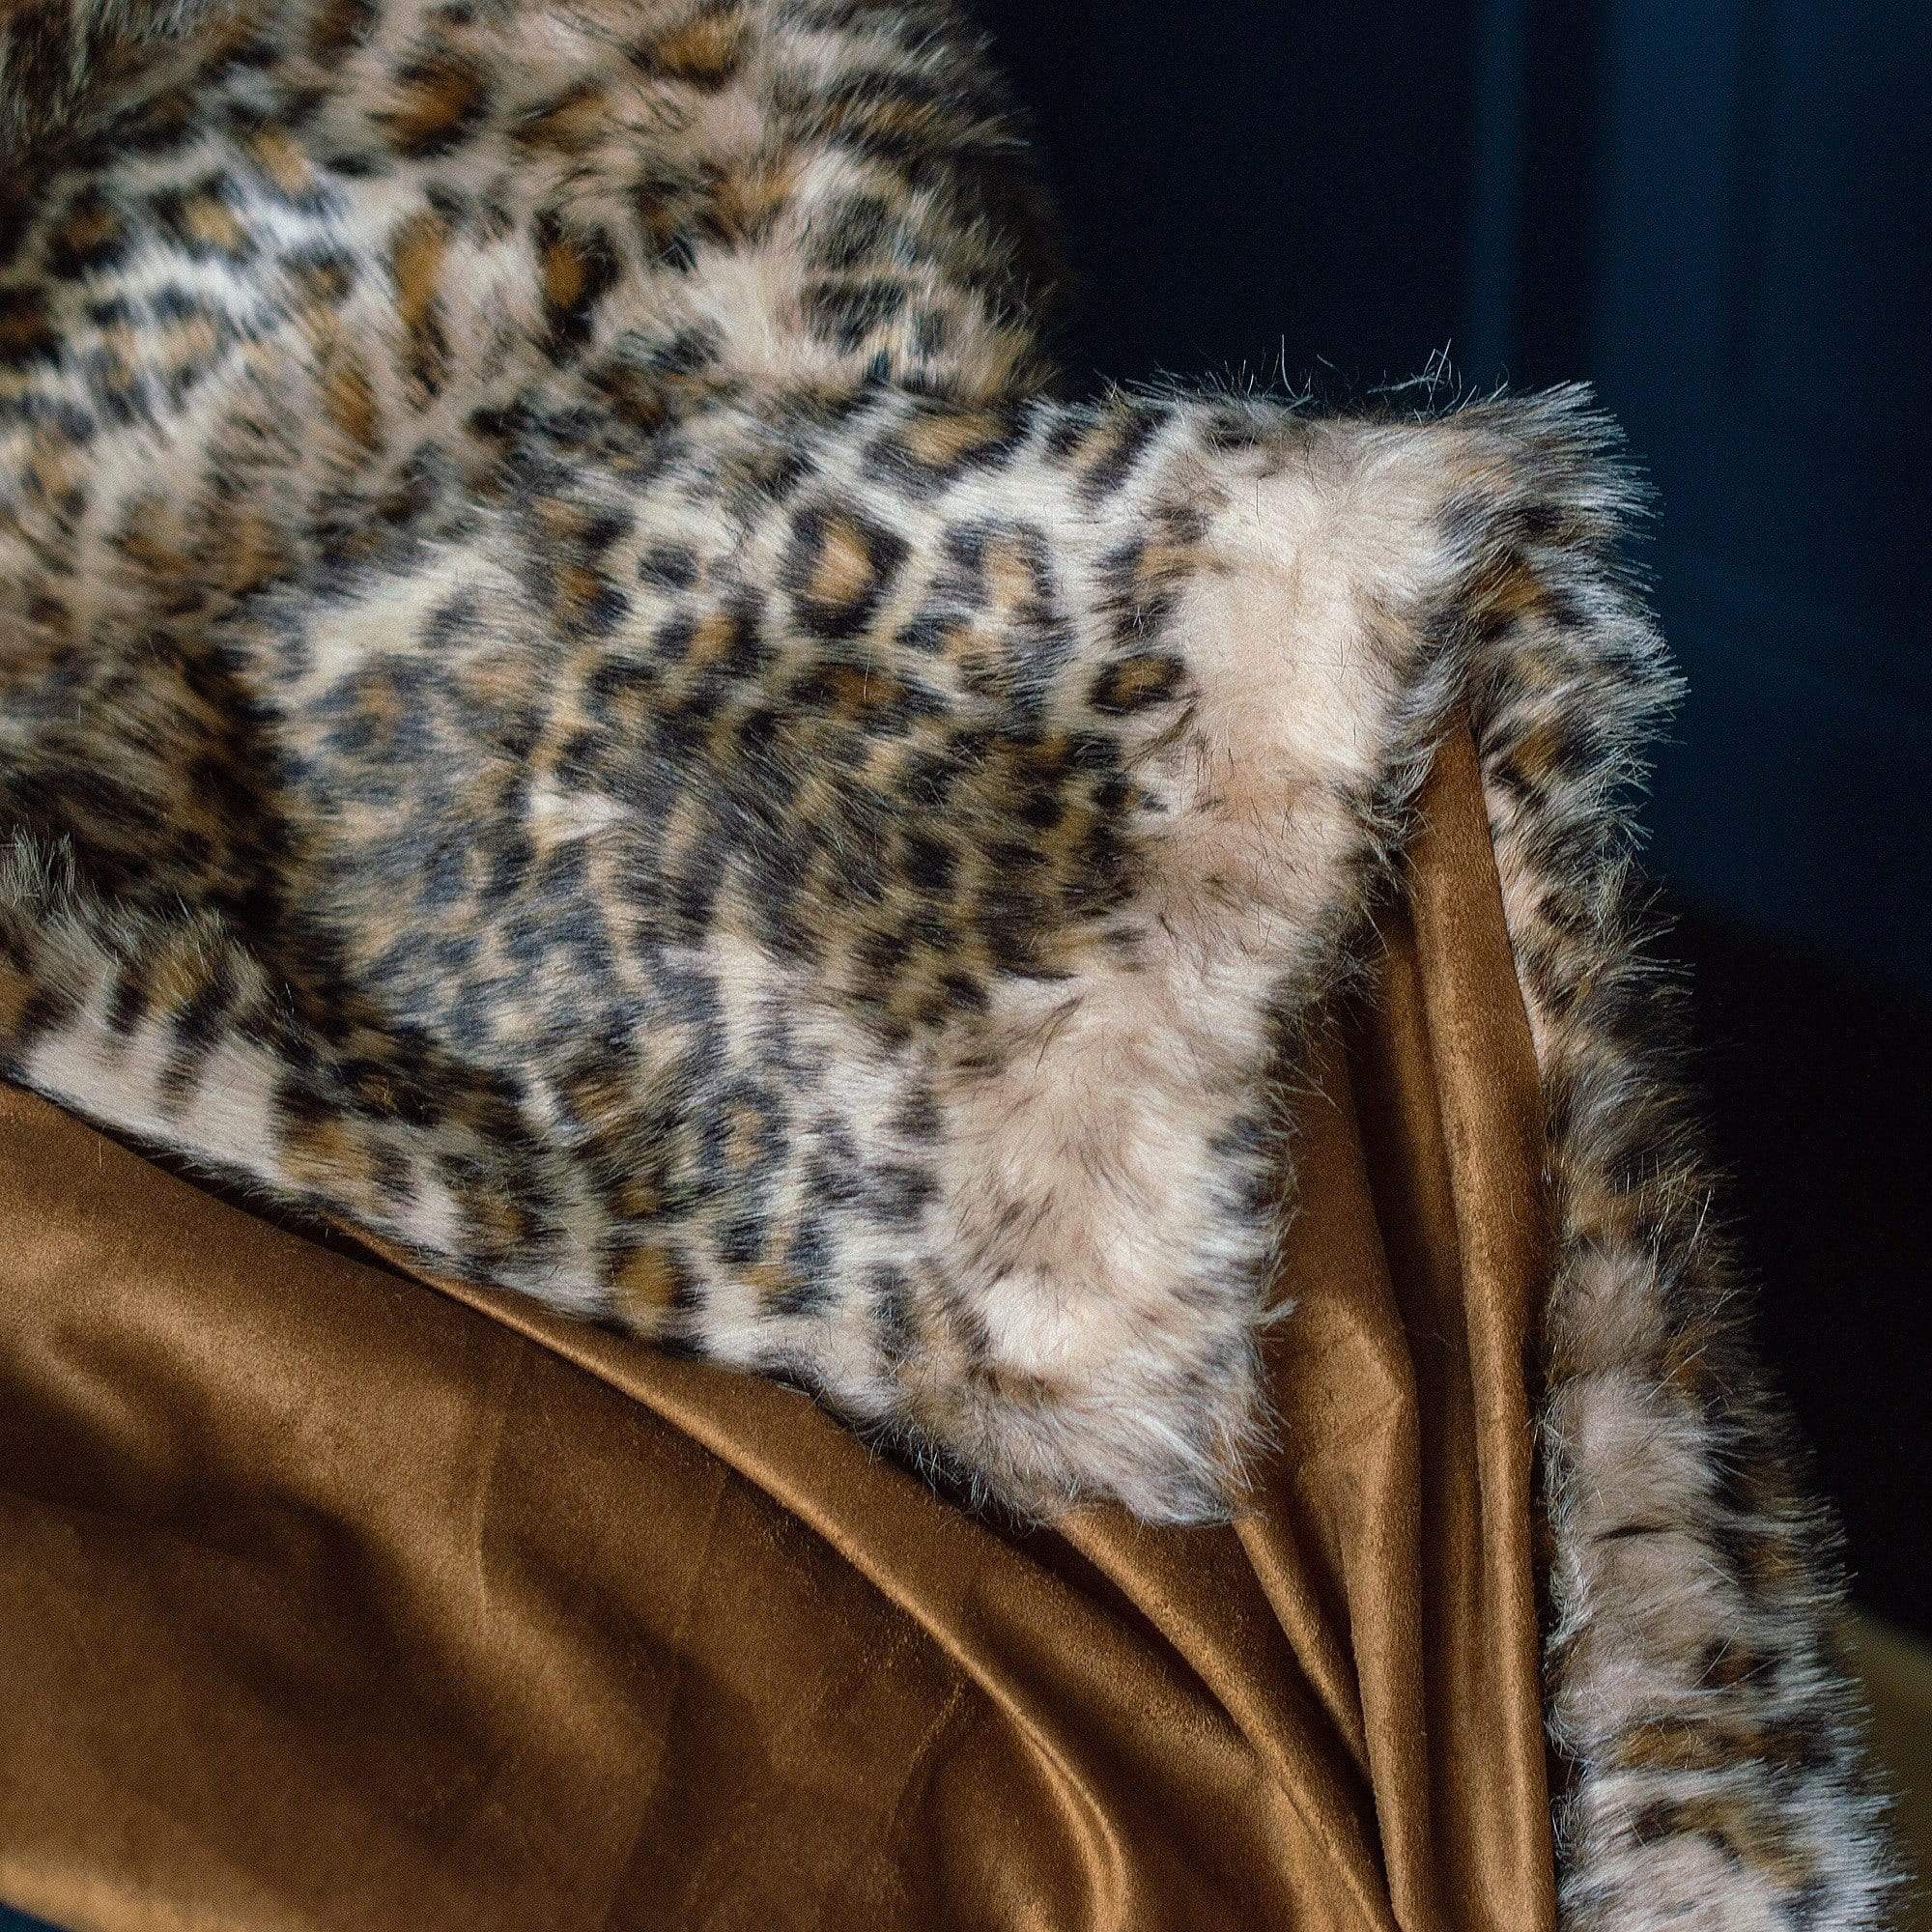 Leopard Print Super Soft Faux Fur Throw